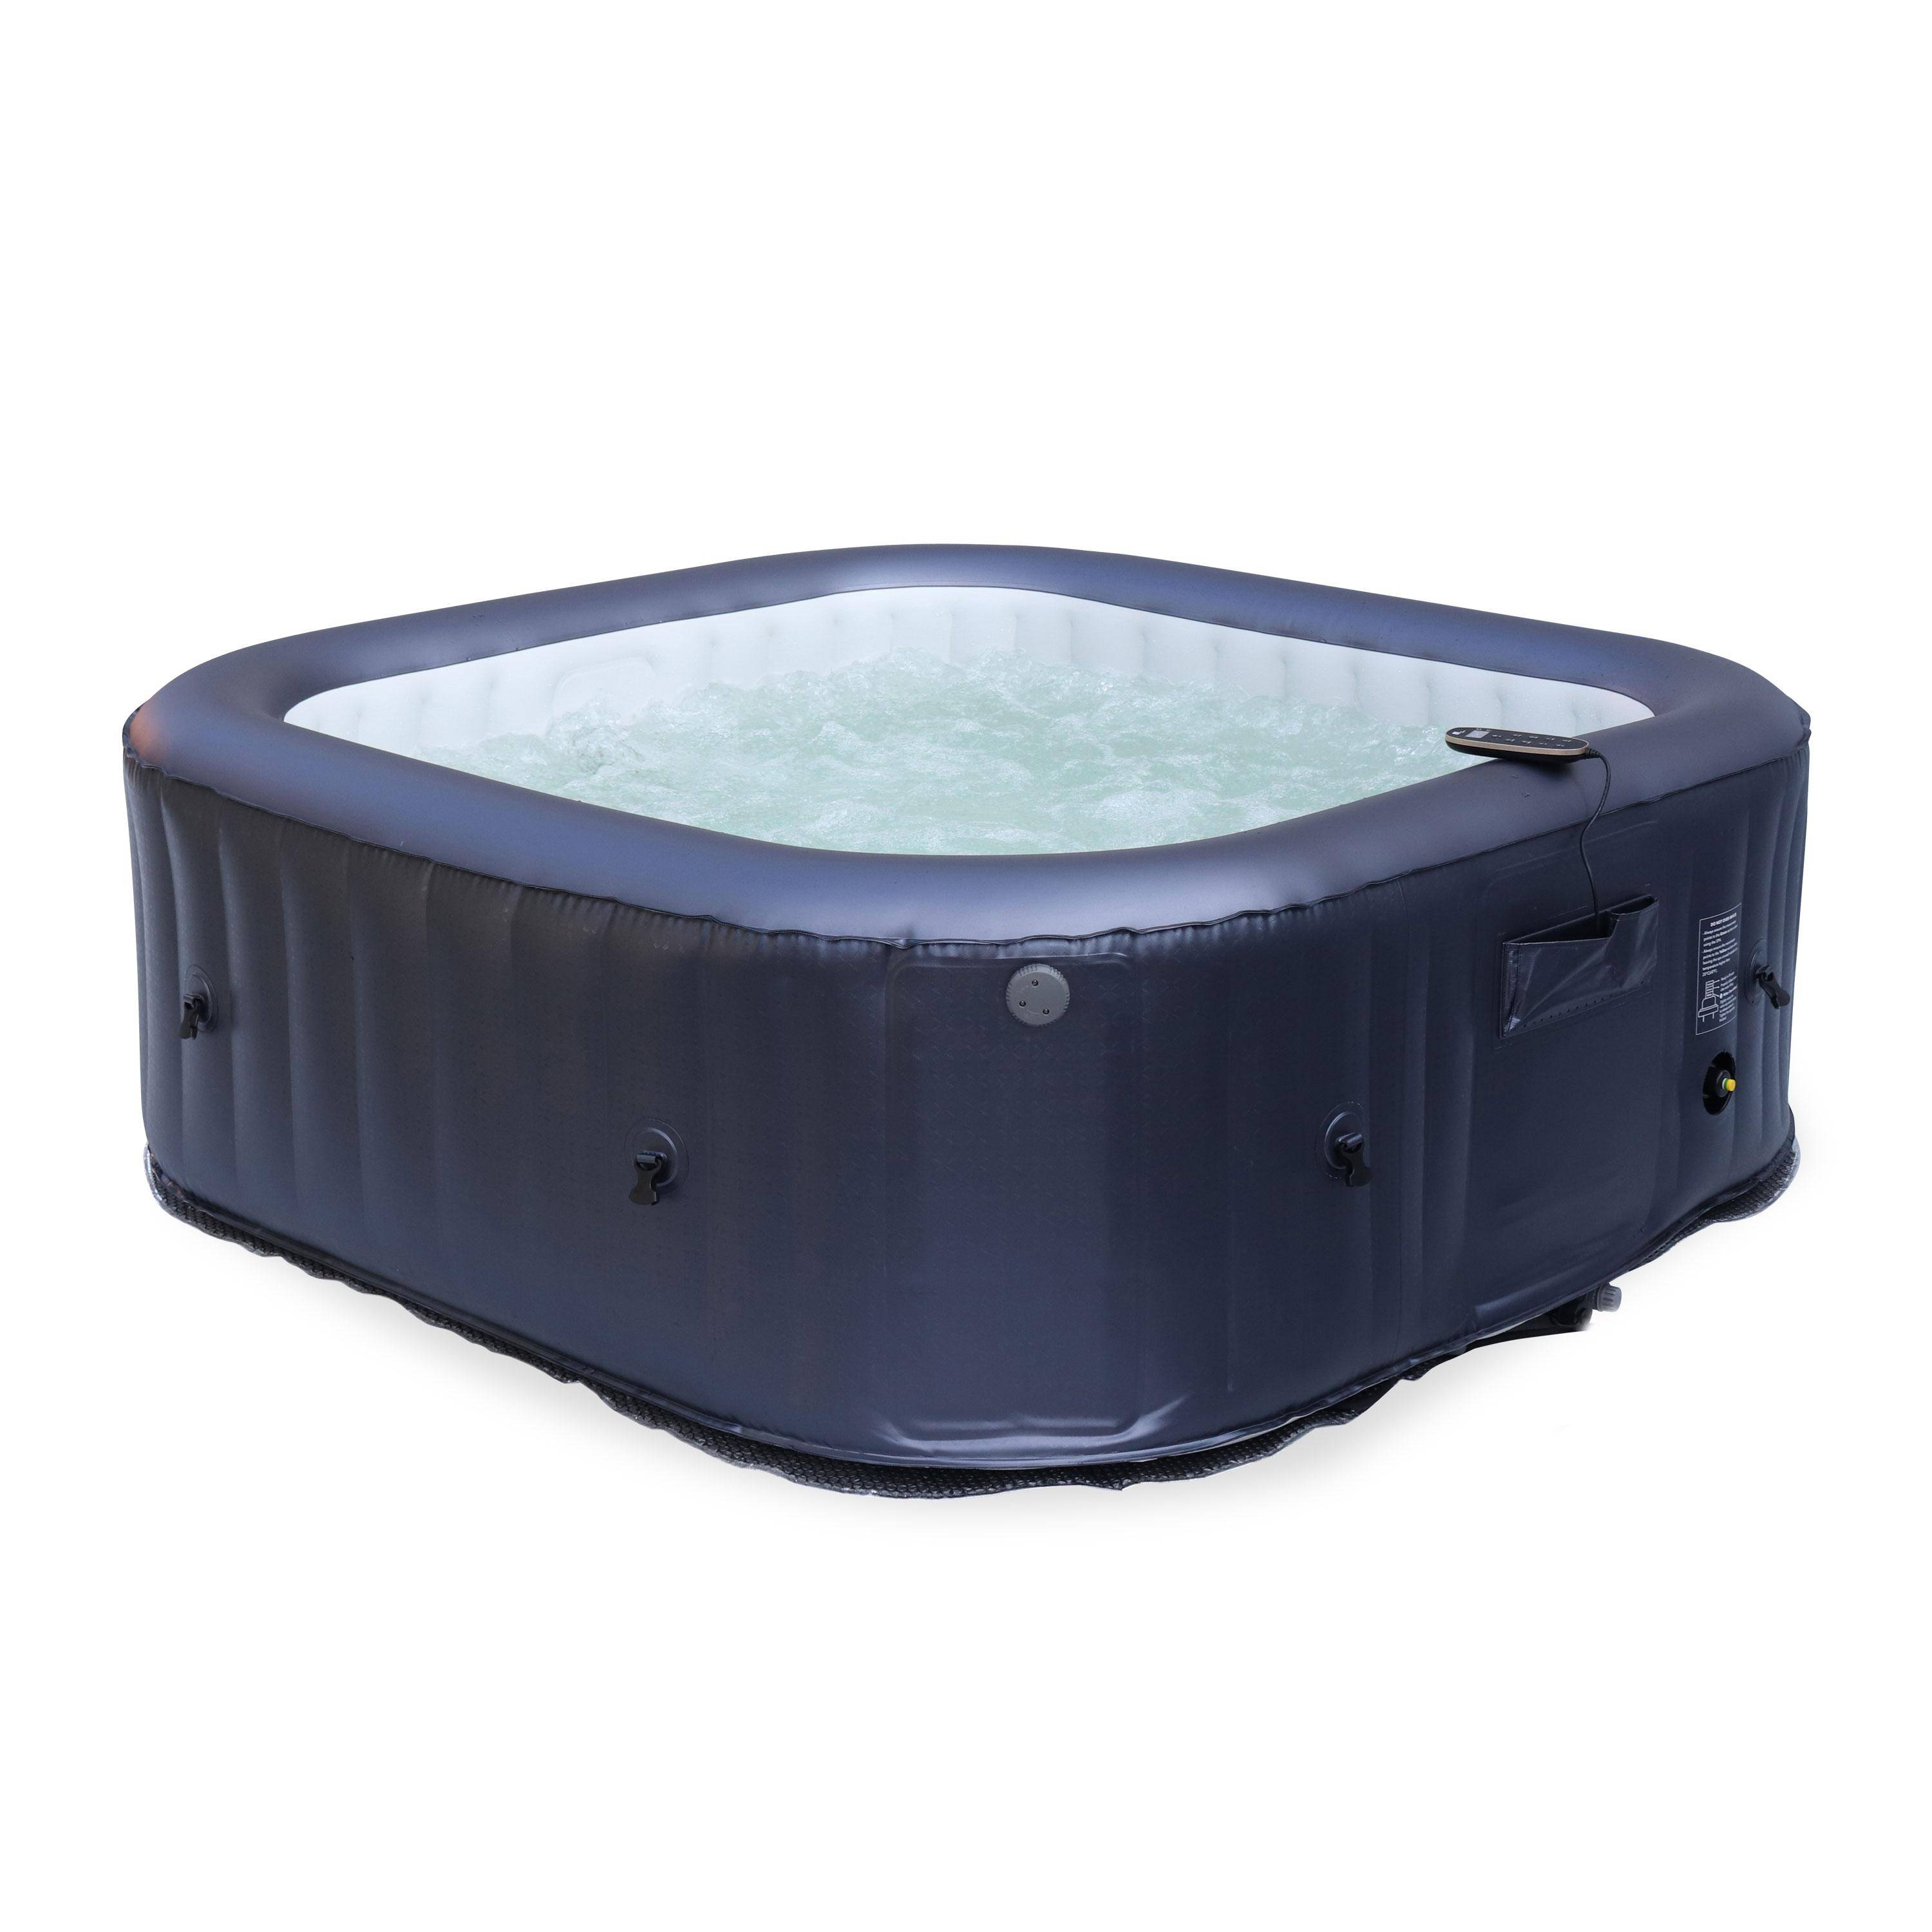  6-person premium square inflatable hot tub MSpa - 185cm, PVC, pump, heating, self-inflating, massage hydrojets, 2 filter cartridges, cover - Otium 6 - Blue,sweeek,Photo4